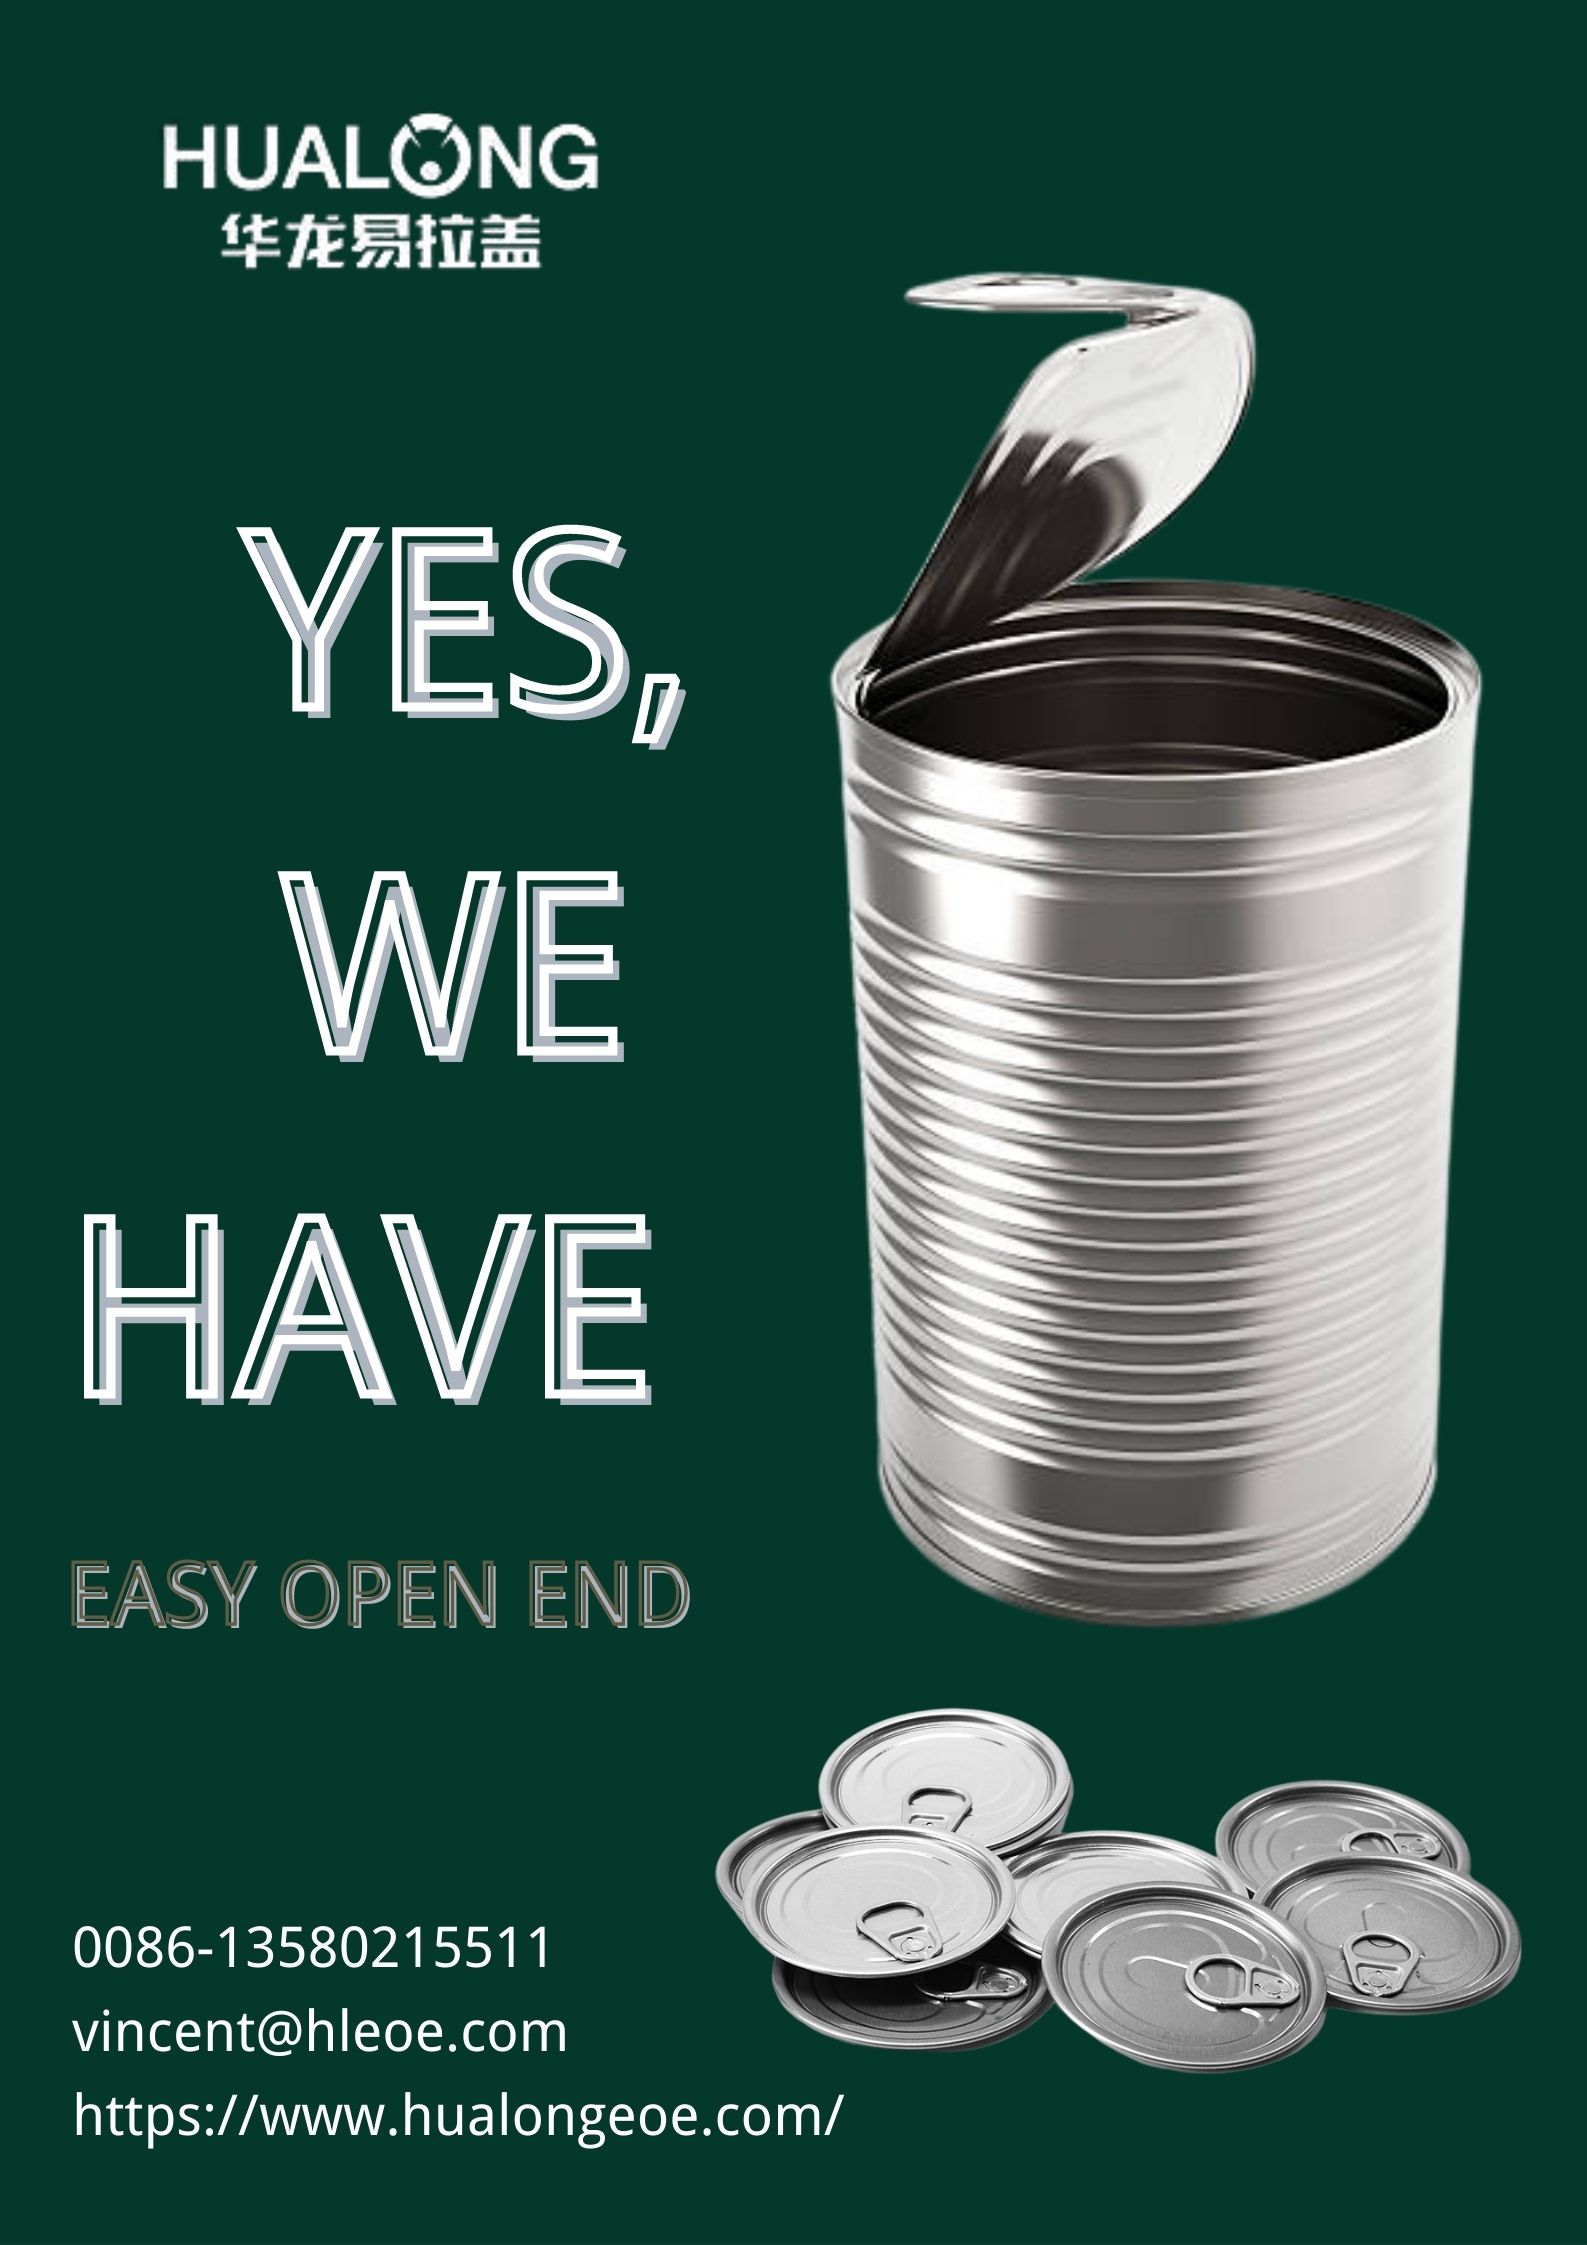 Kako pravilno reciklirati Easy Open End?